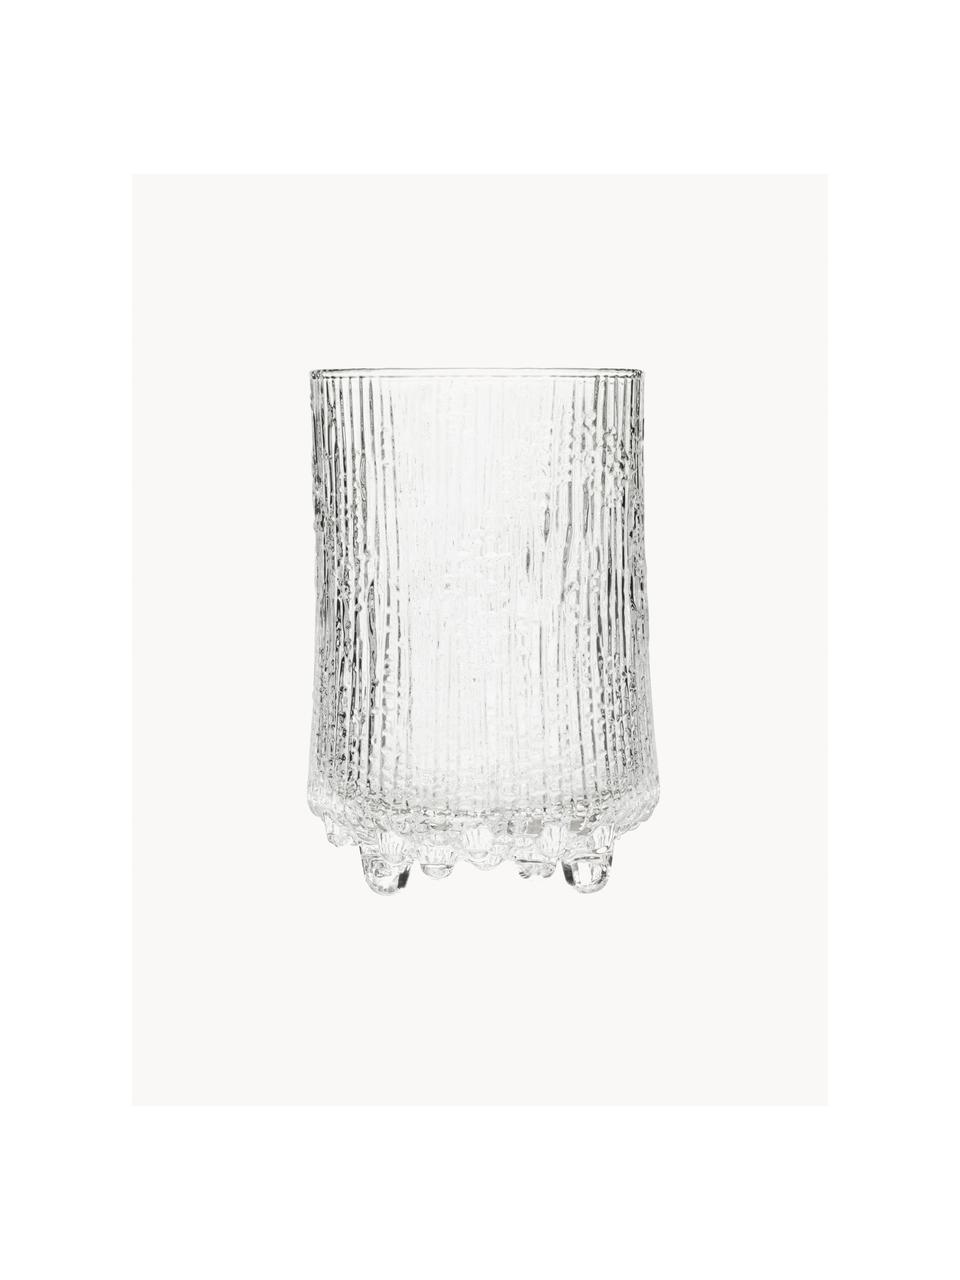 Longdrinkgläser Ultima Thule, 2 Stück, Glas, Transparent, Ø 9 x H 13 cm, 380 ml